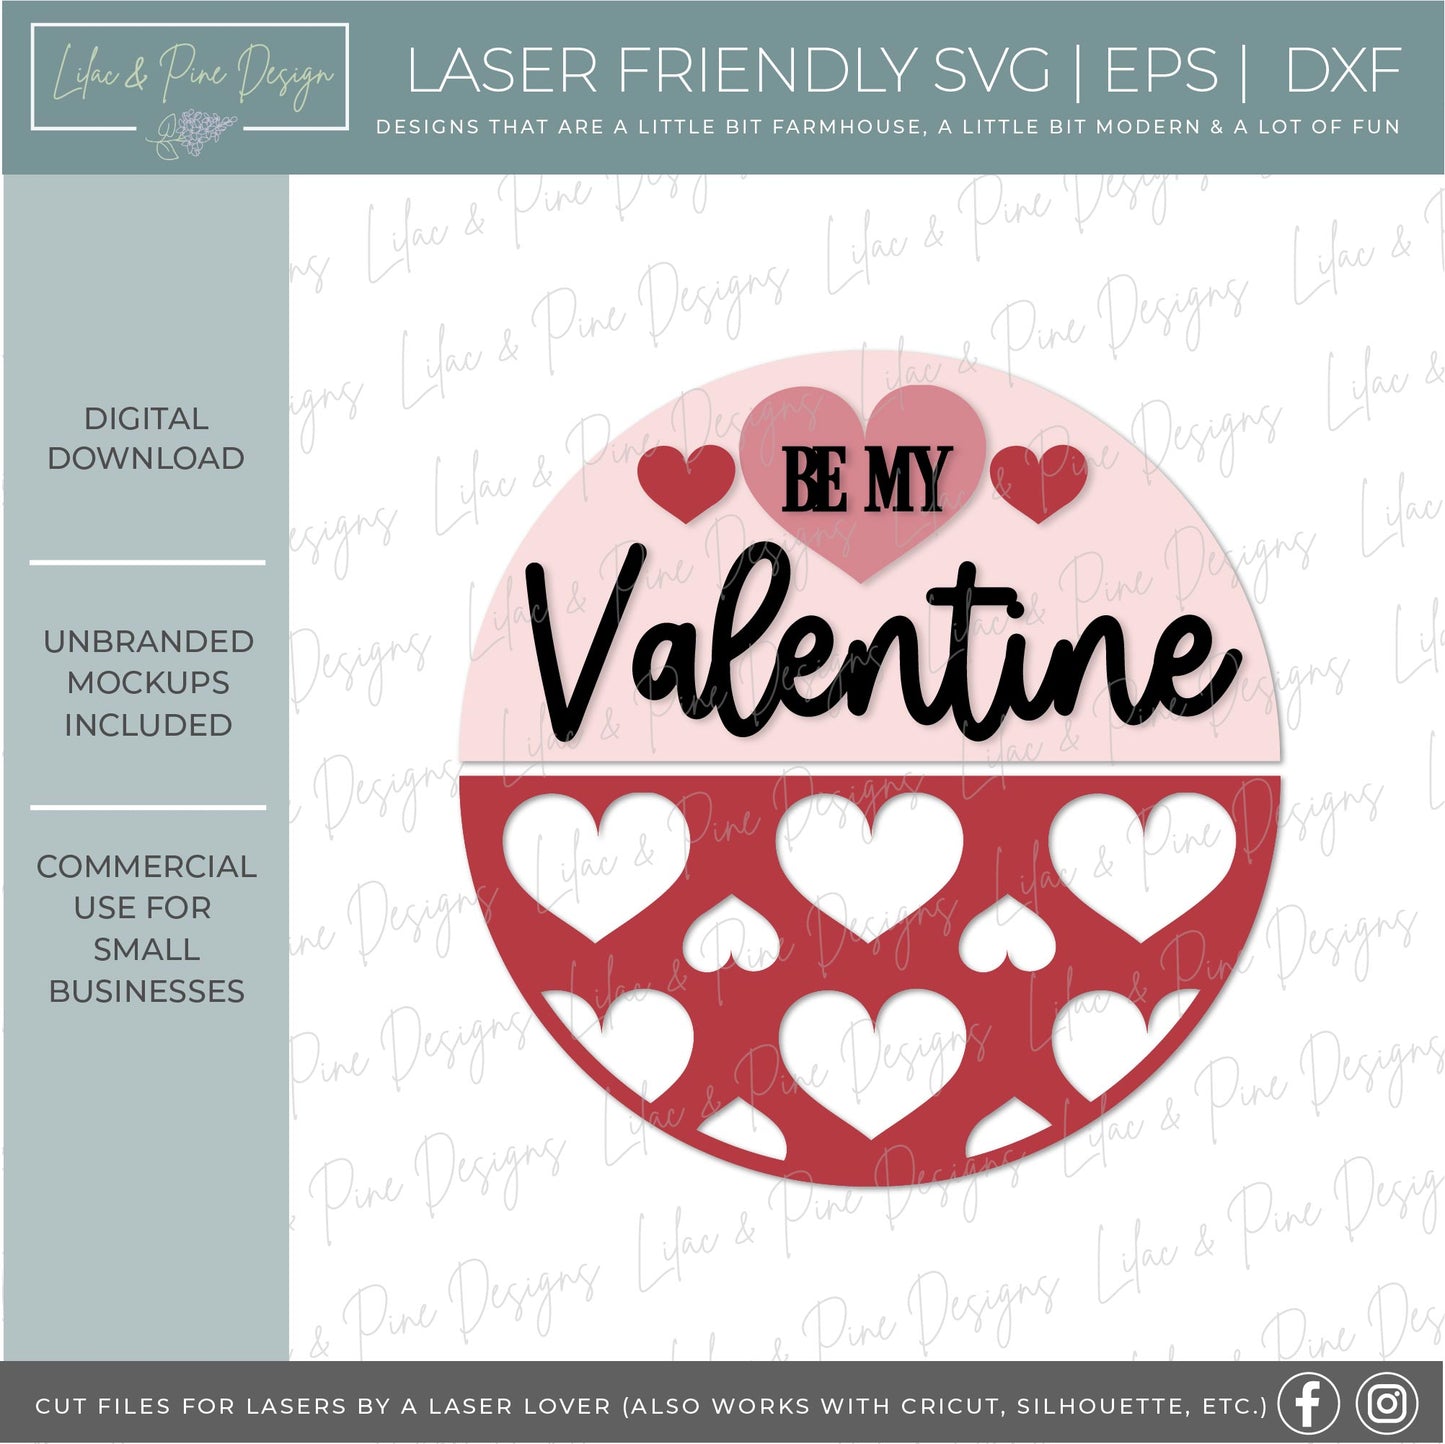 Round Interchangeable Insert - be my Valentine SVG - Lucky SVG - Glowforge SVG - laser cut file